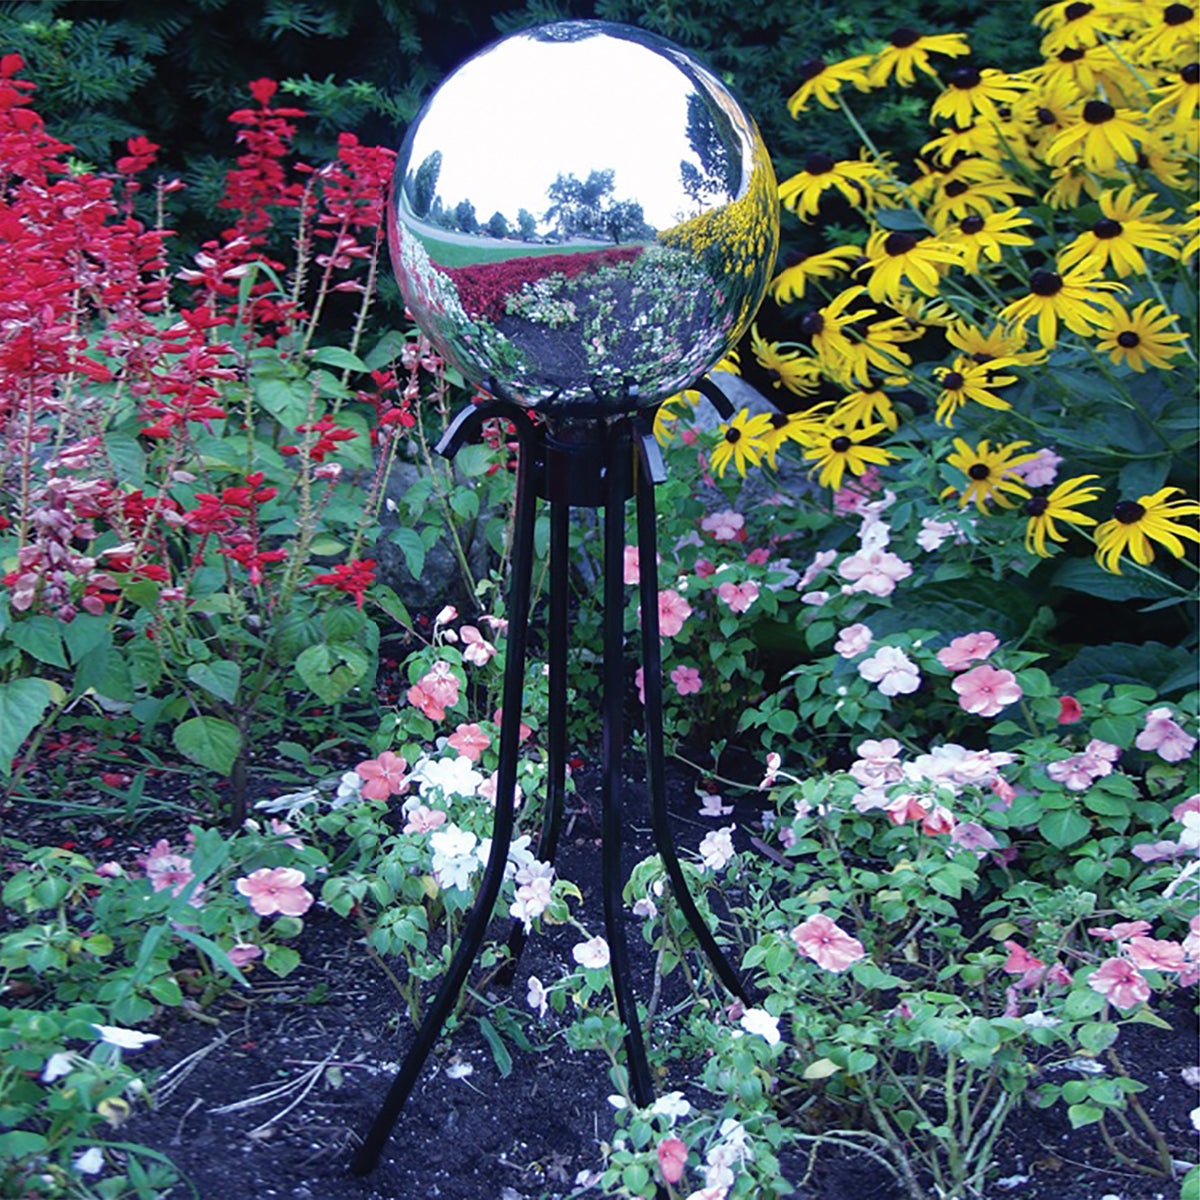 Low Profile Globe Stand